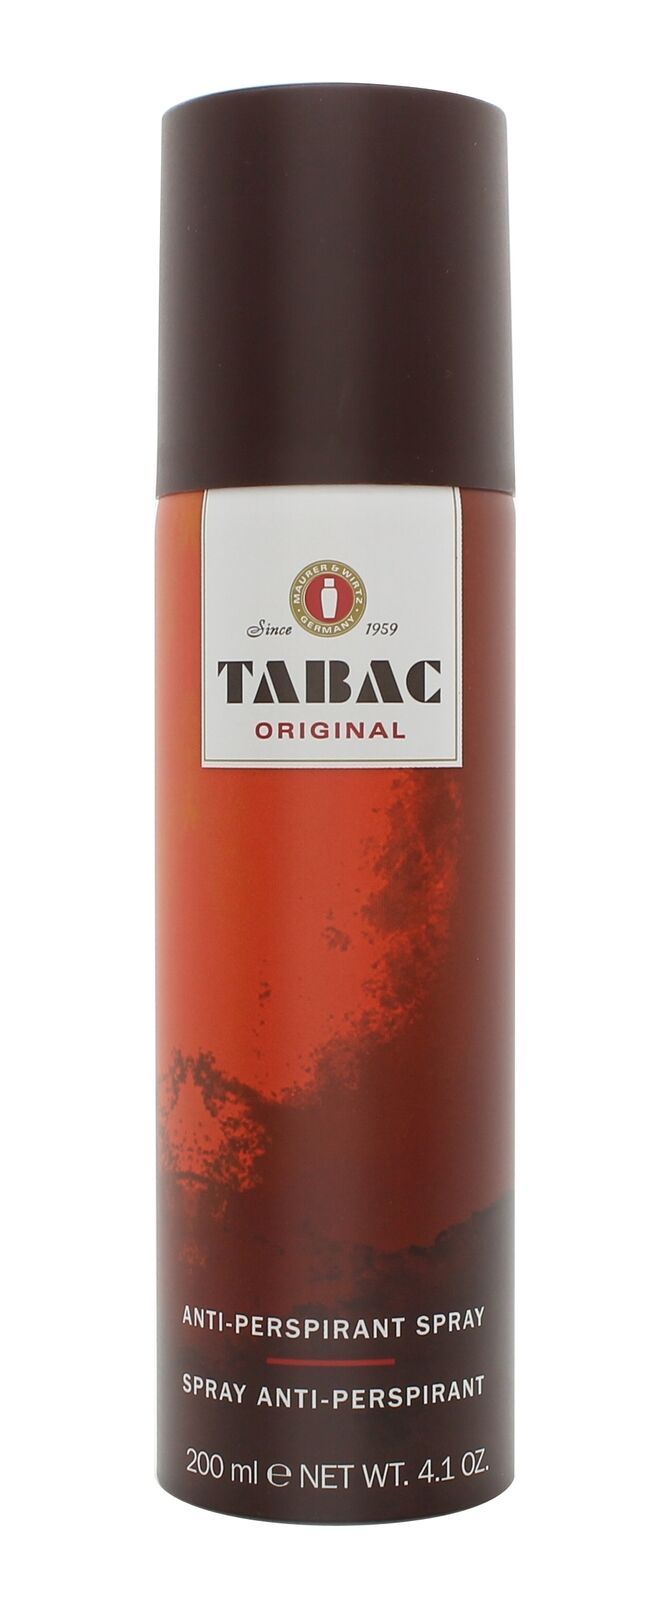 Mäurer & Wirtz Tabac Original Deodorant 200ml Spray